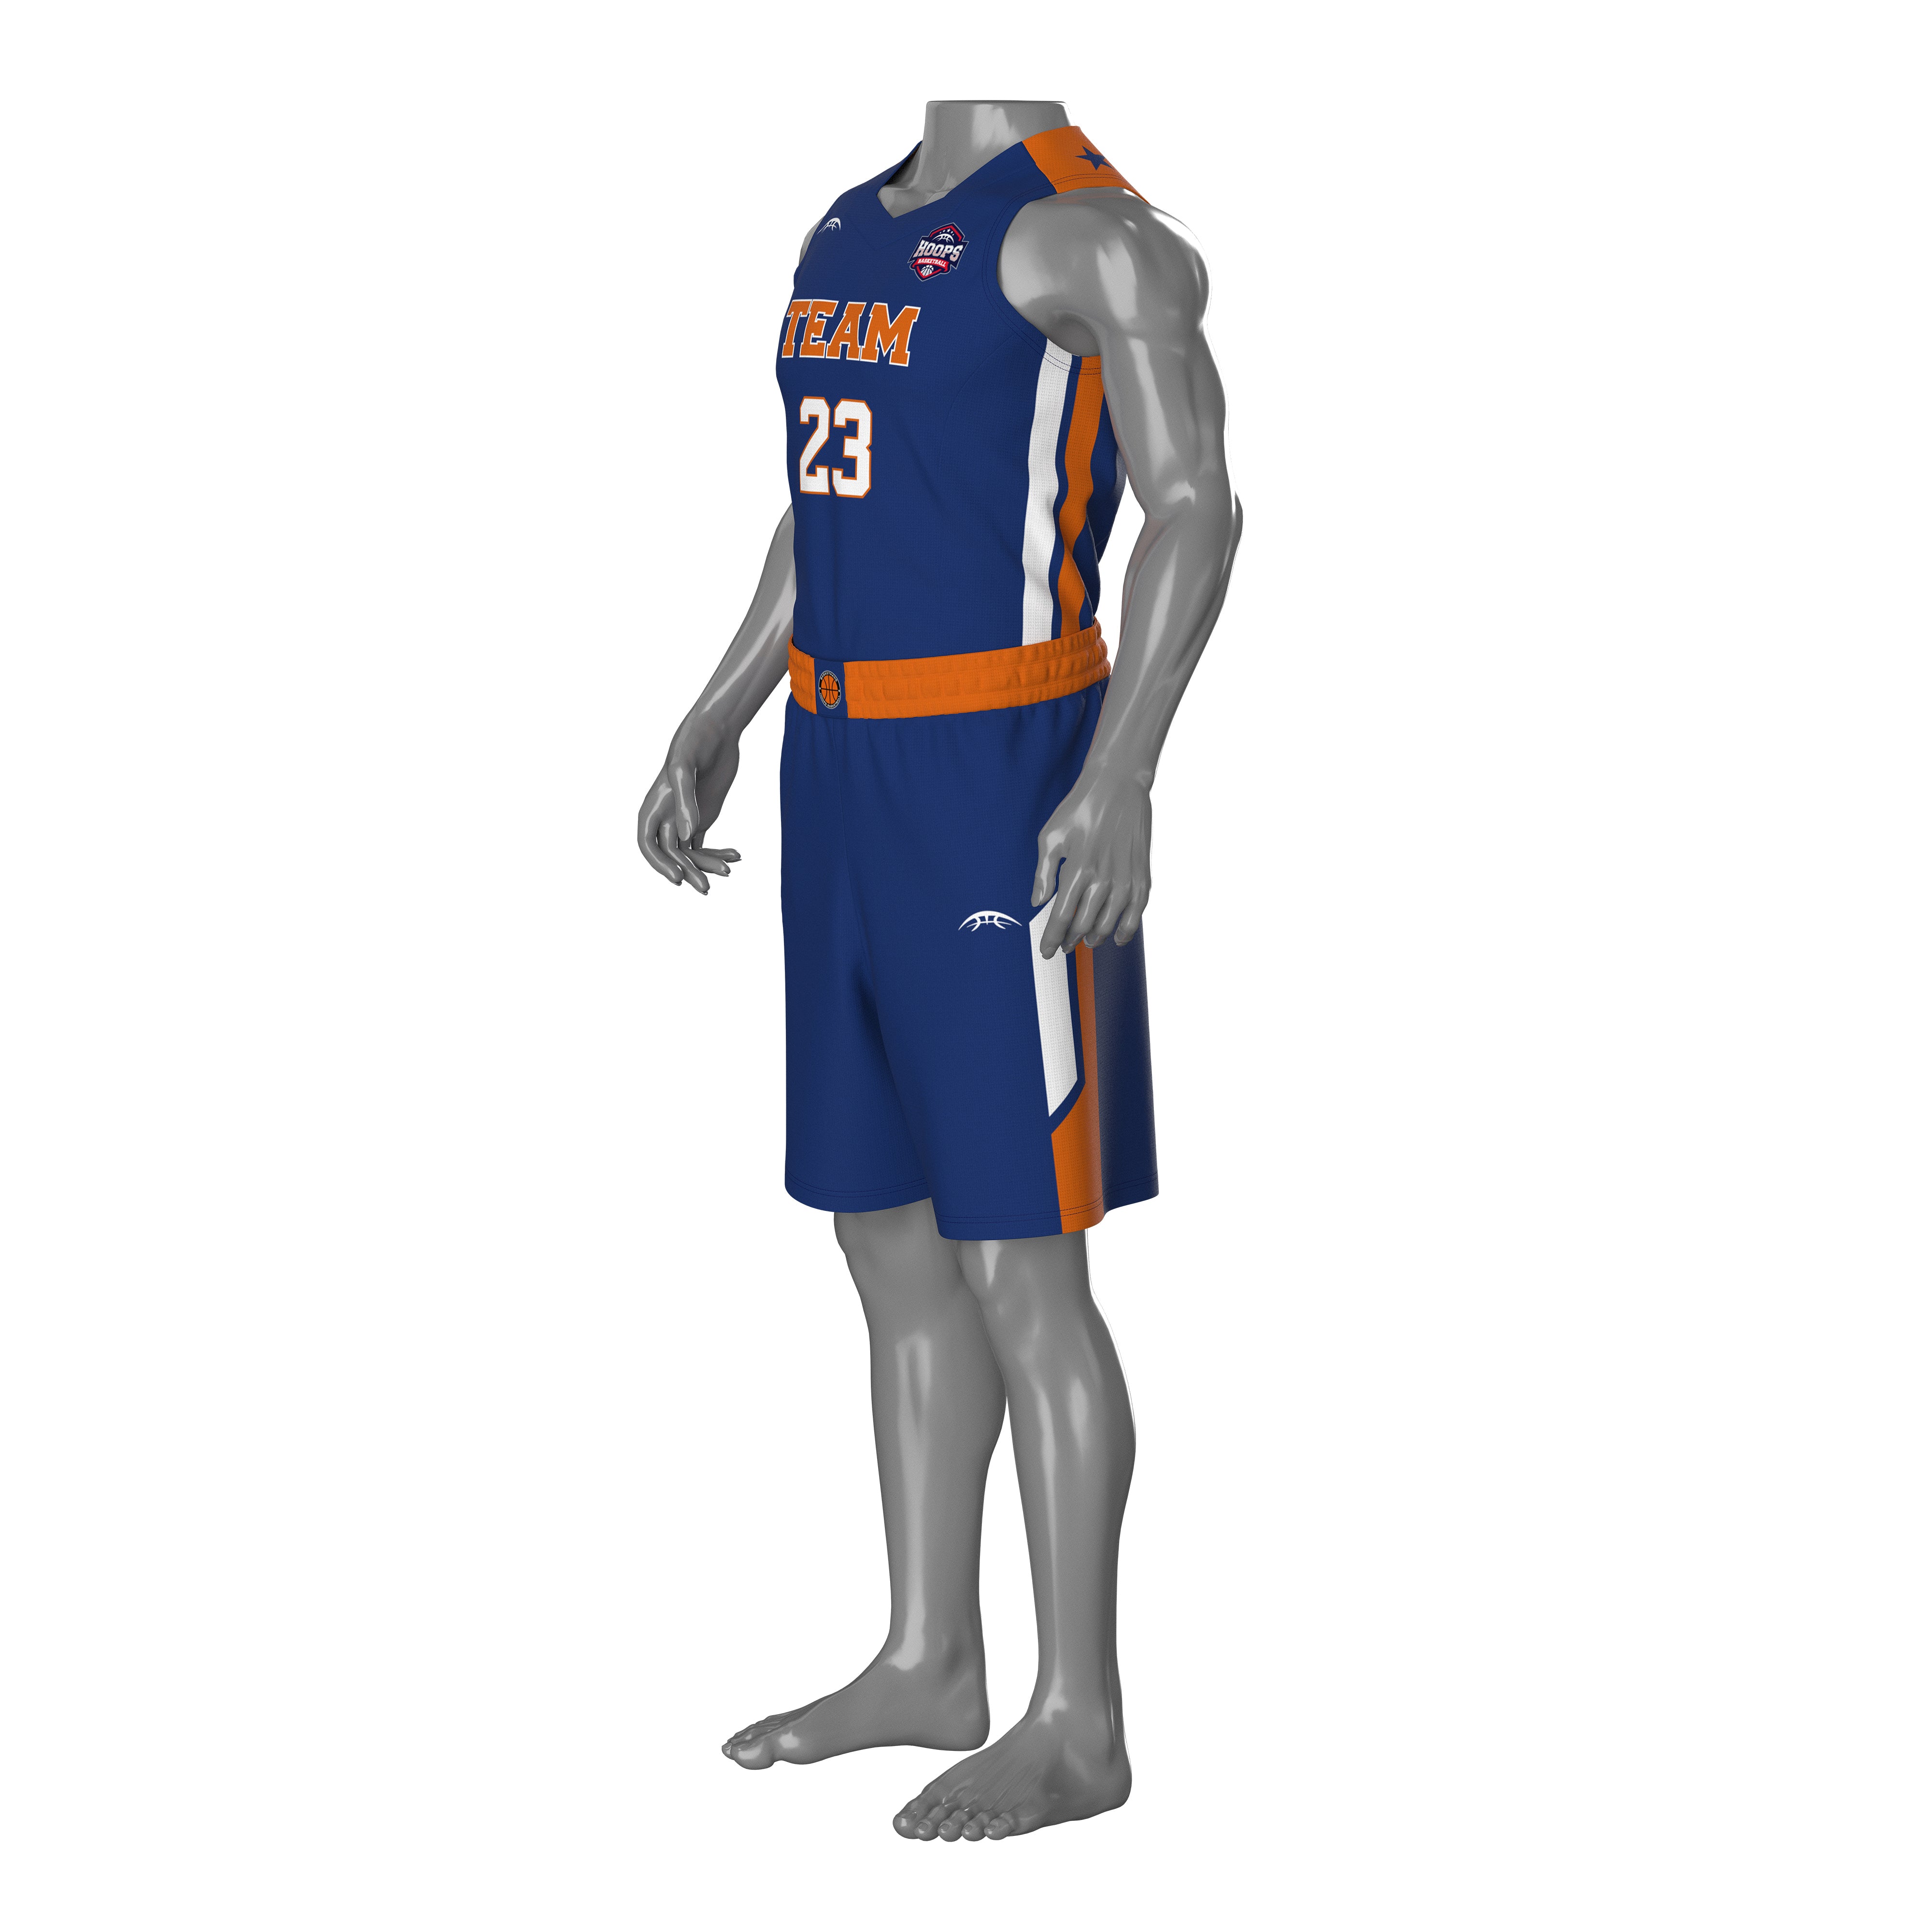 Custom Basketball Jerseys, Sports Uniforms